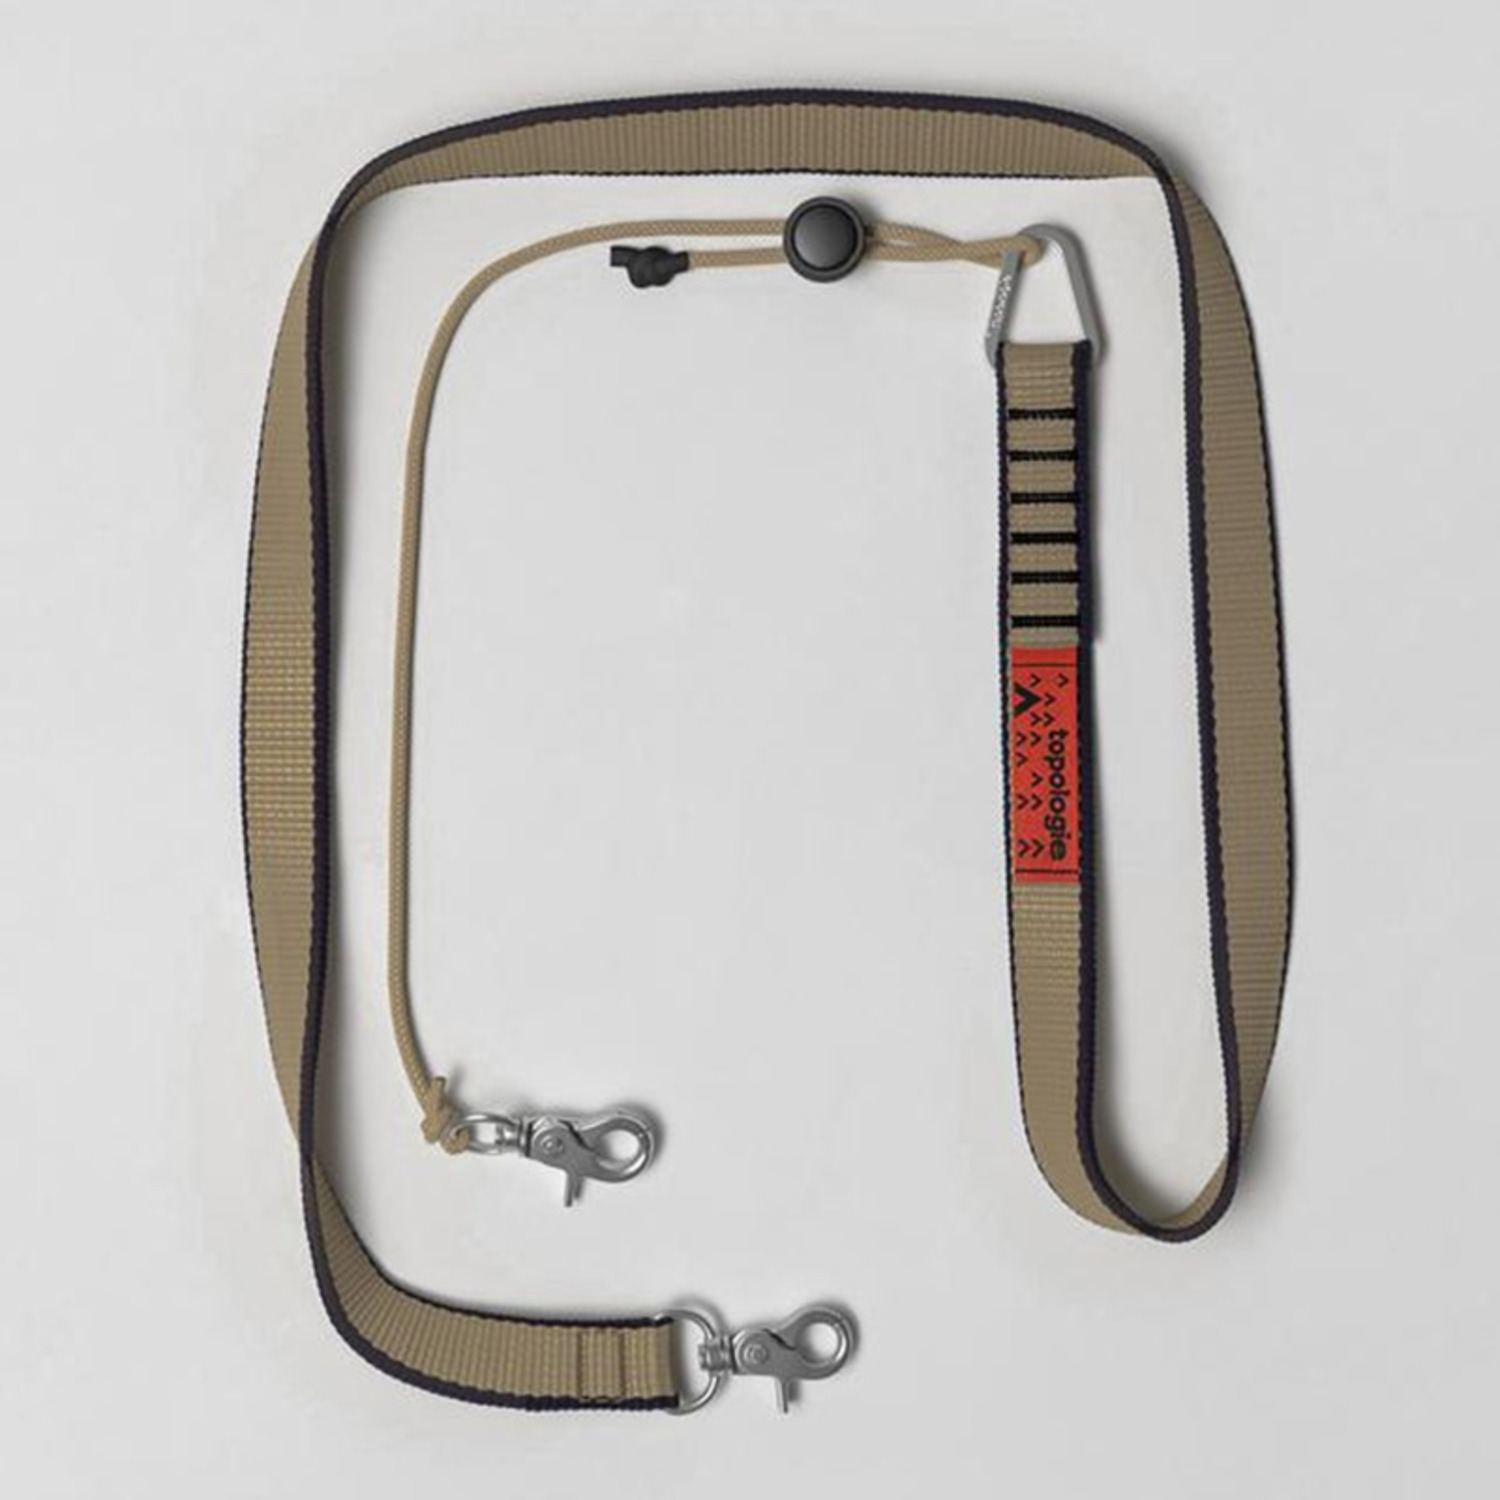 20mm 绳索背带手机挂绳-7